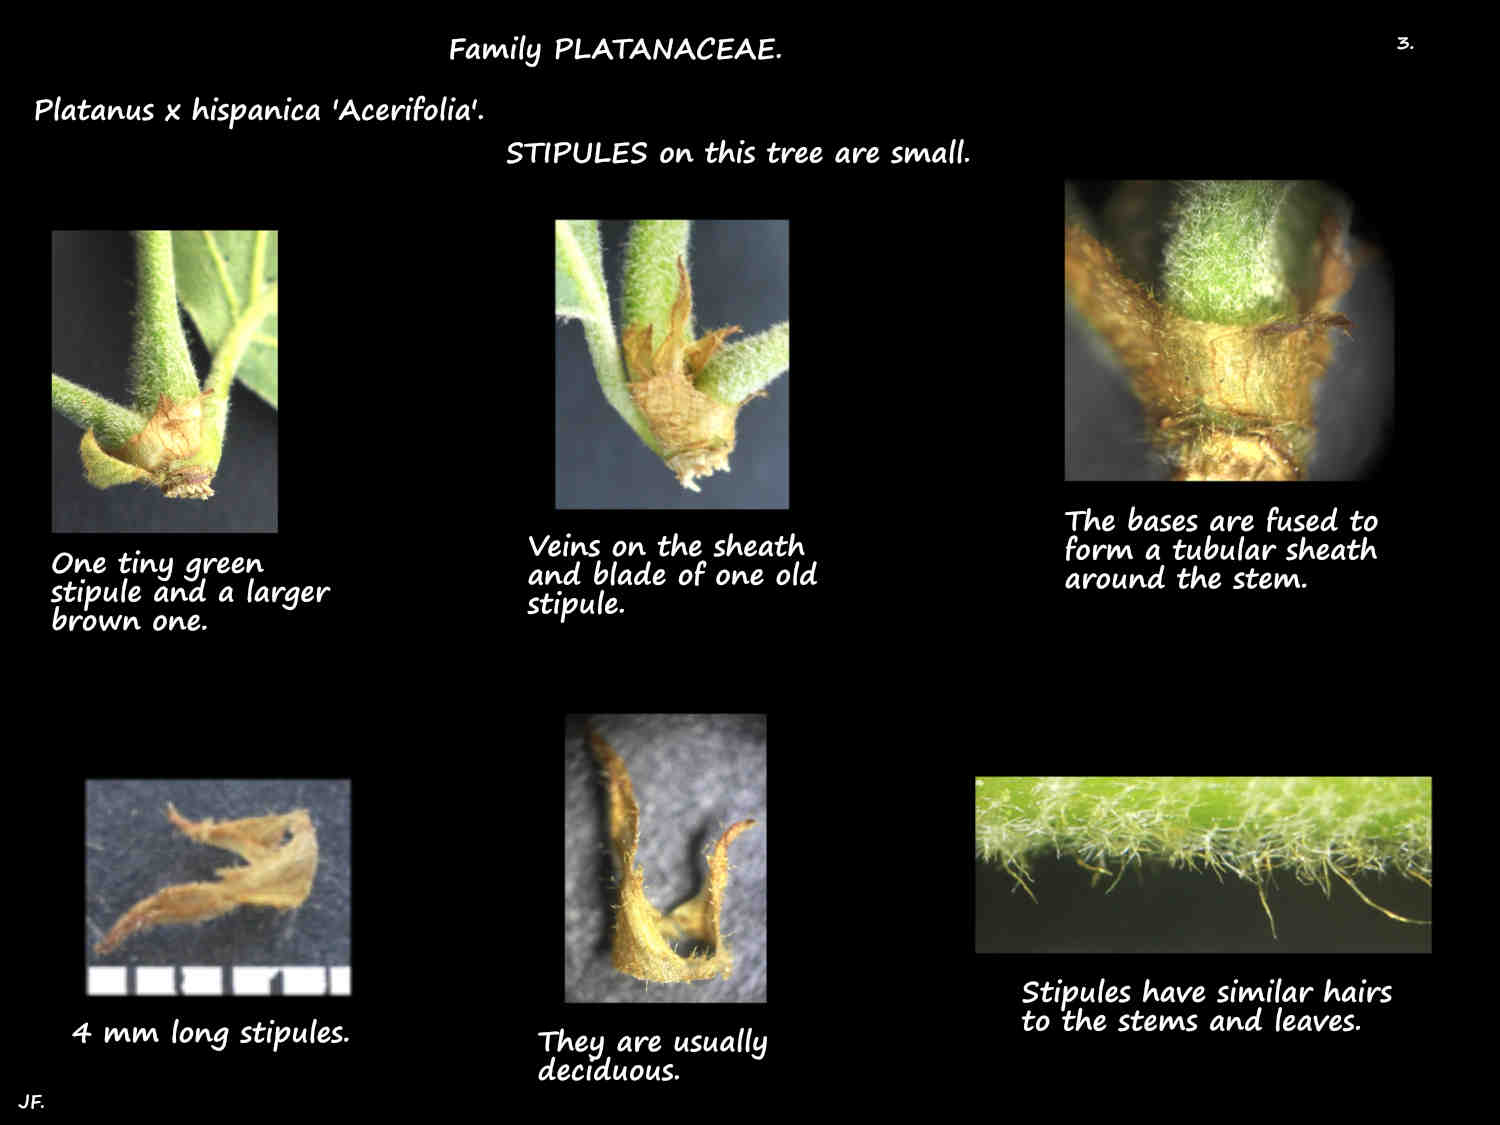 3 Stipules on Platanus x hispanica stems